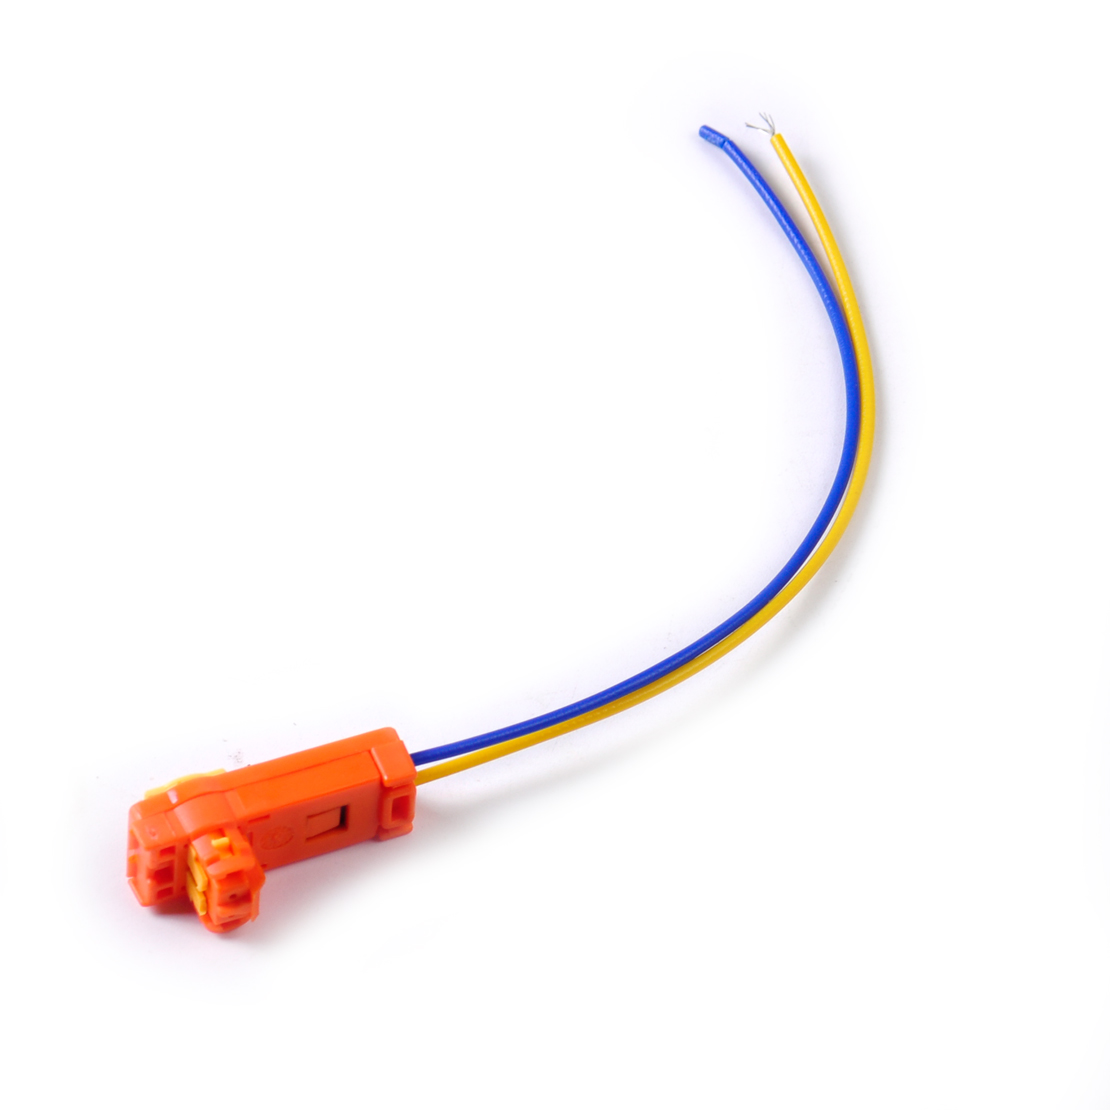 2x Airbag Clockspring Wires Connector Plug Fit for VW Toyota Nissan Mazda Subaru